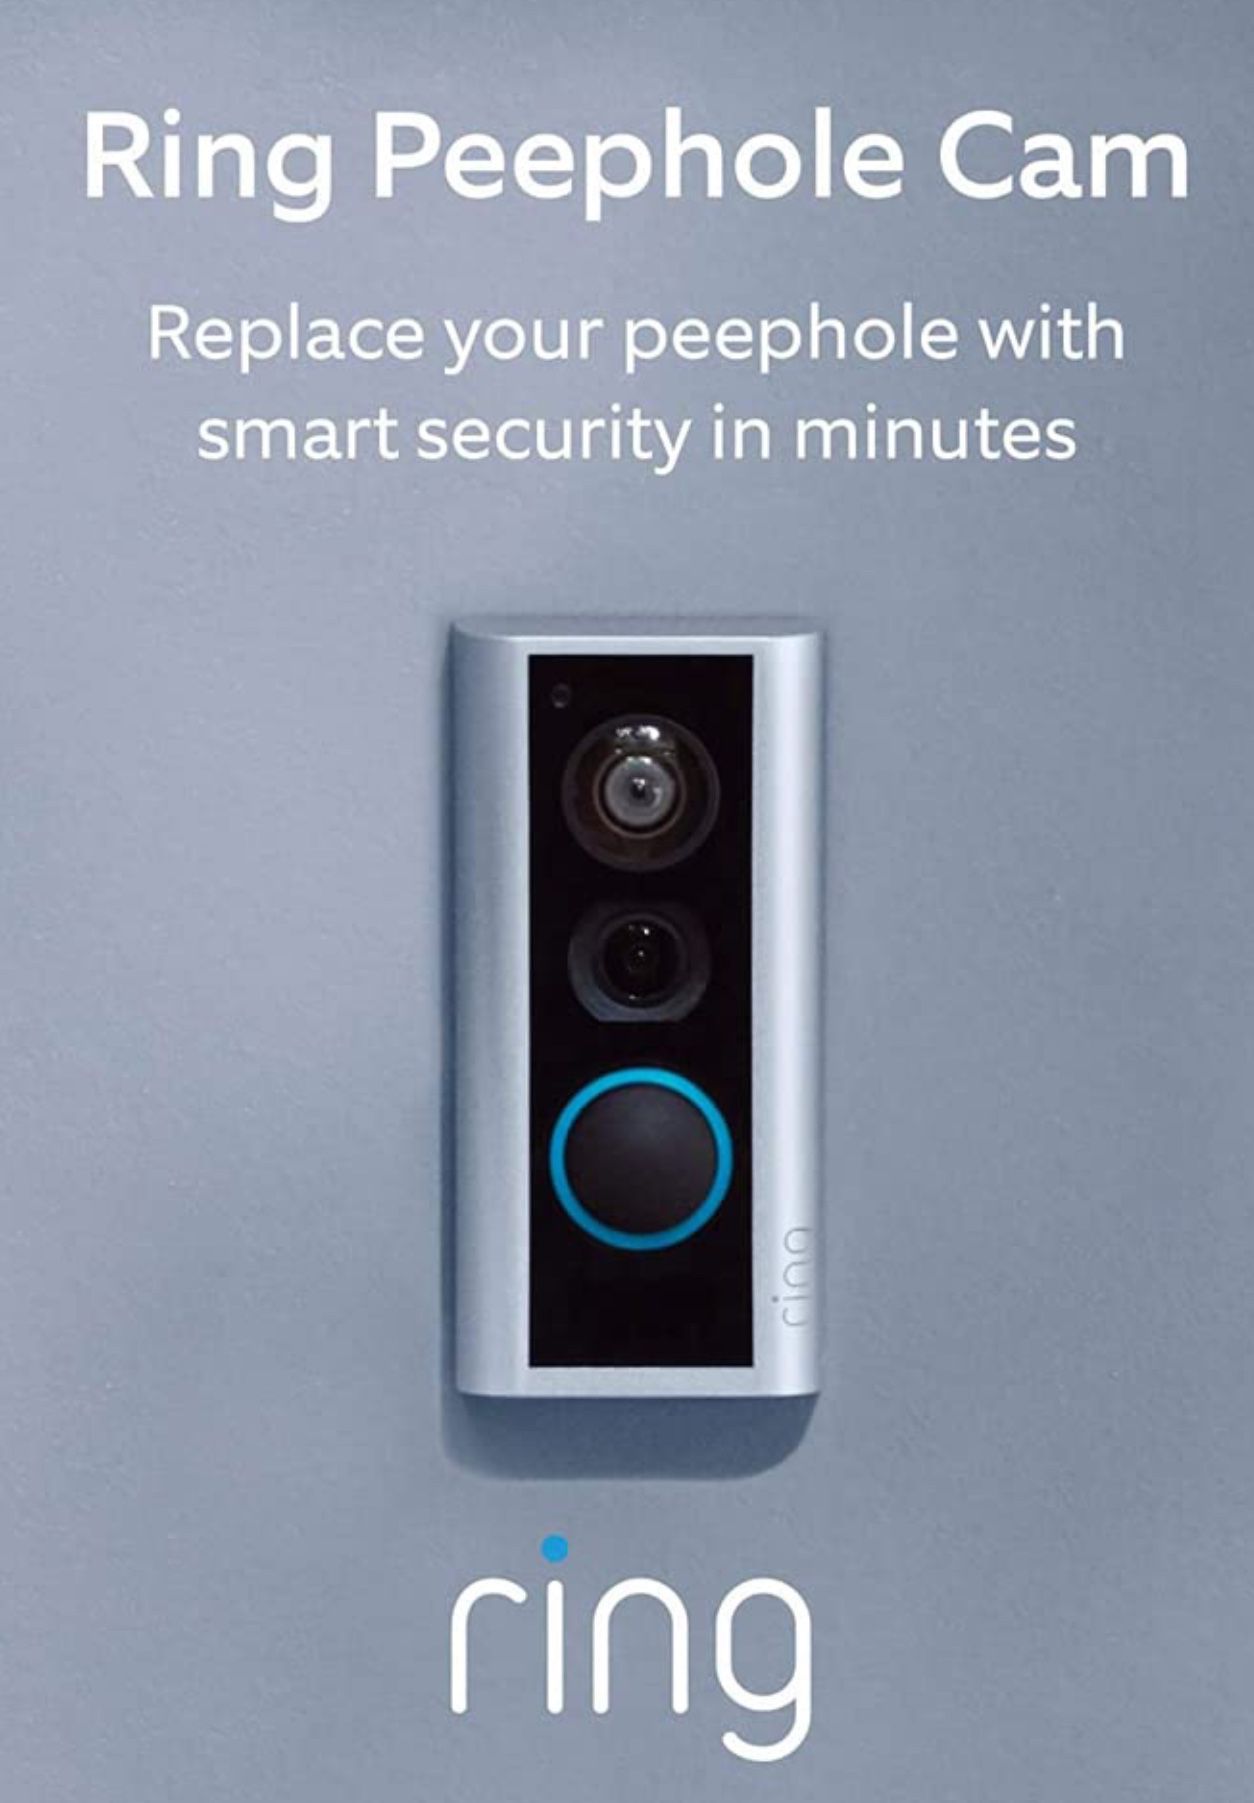 New Ring Peephole Security Video/2 Way Audio Doorbell